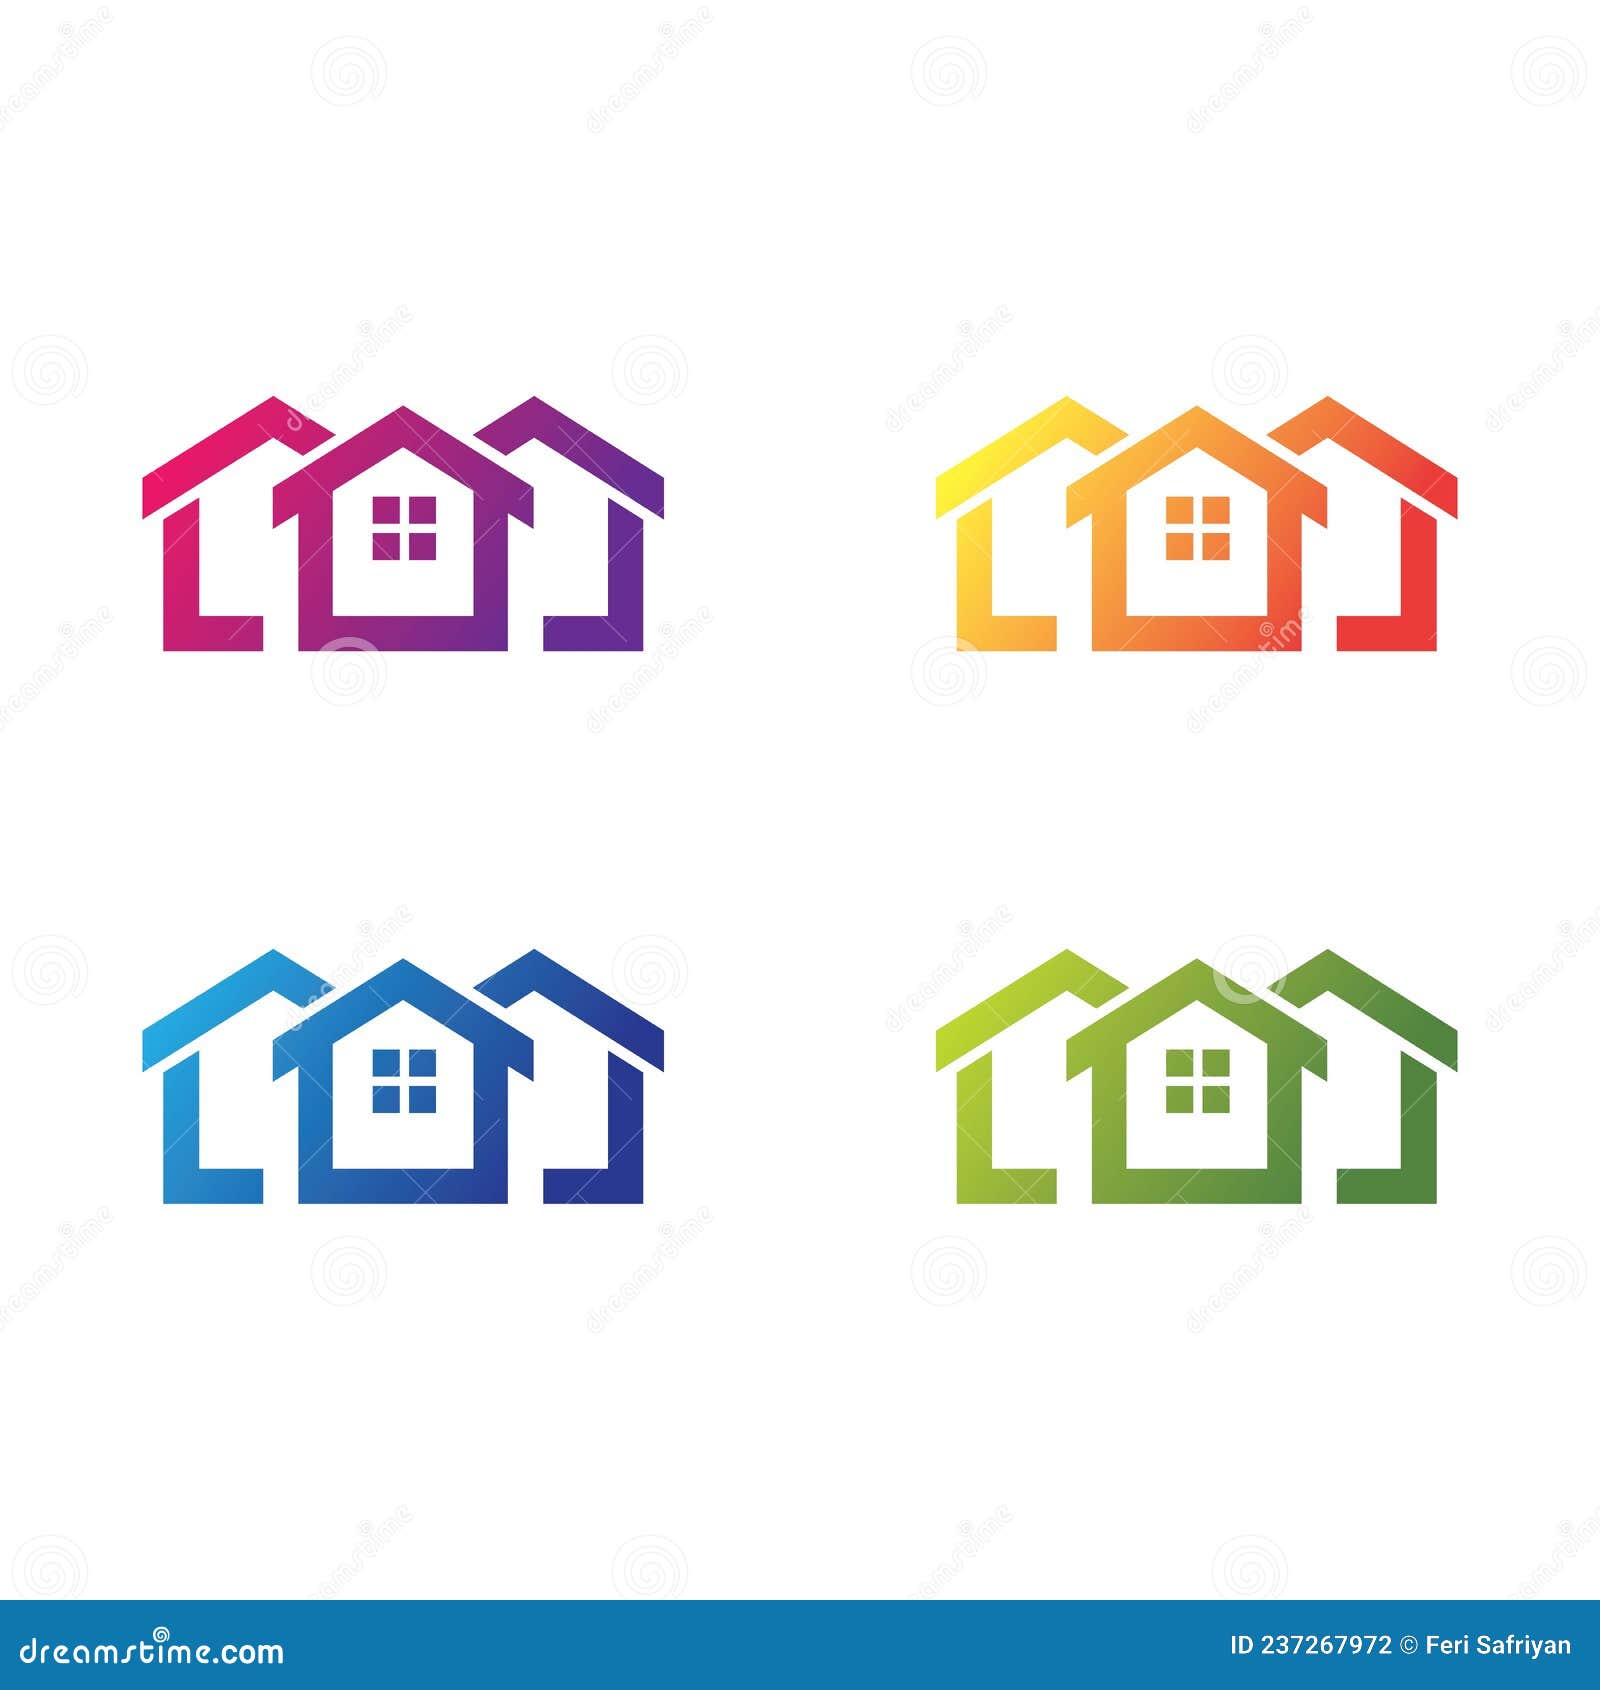 Real estate icon set stock vector. Illustration of logo - 237267972